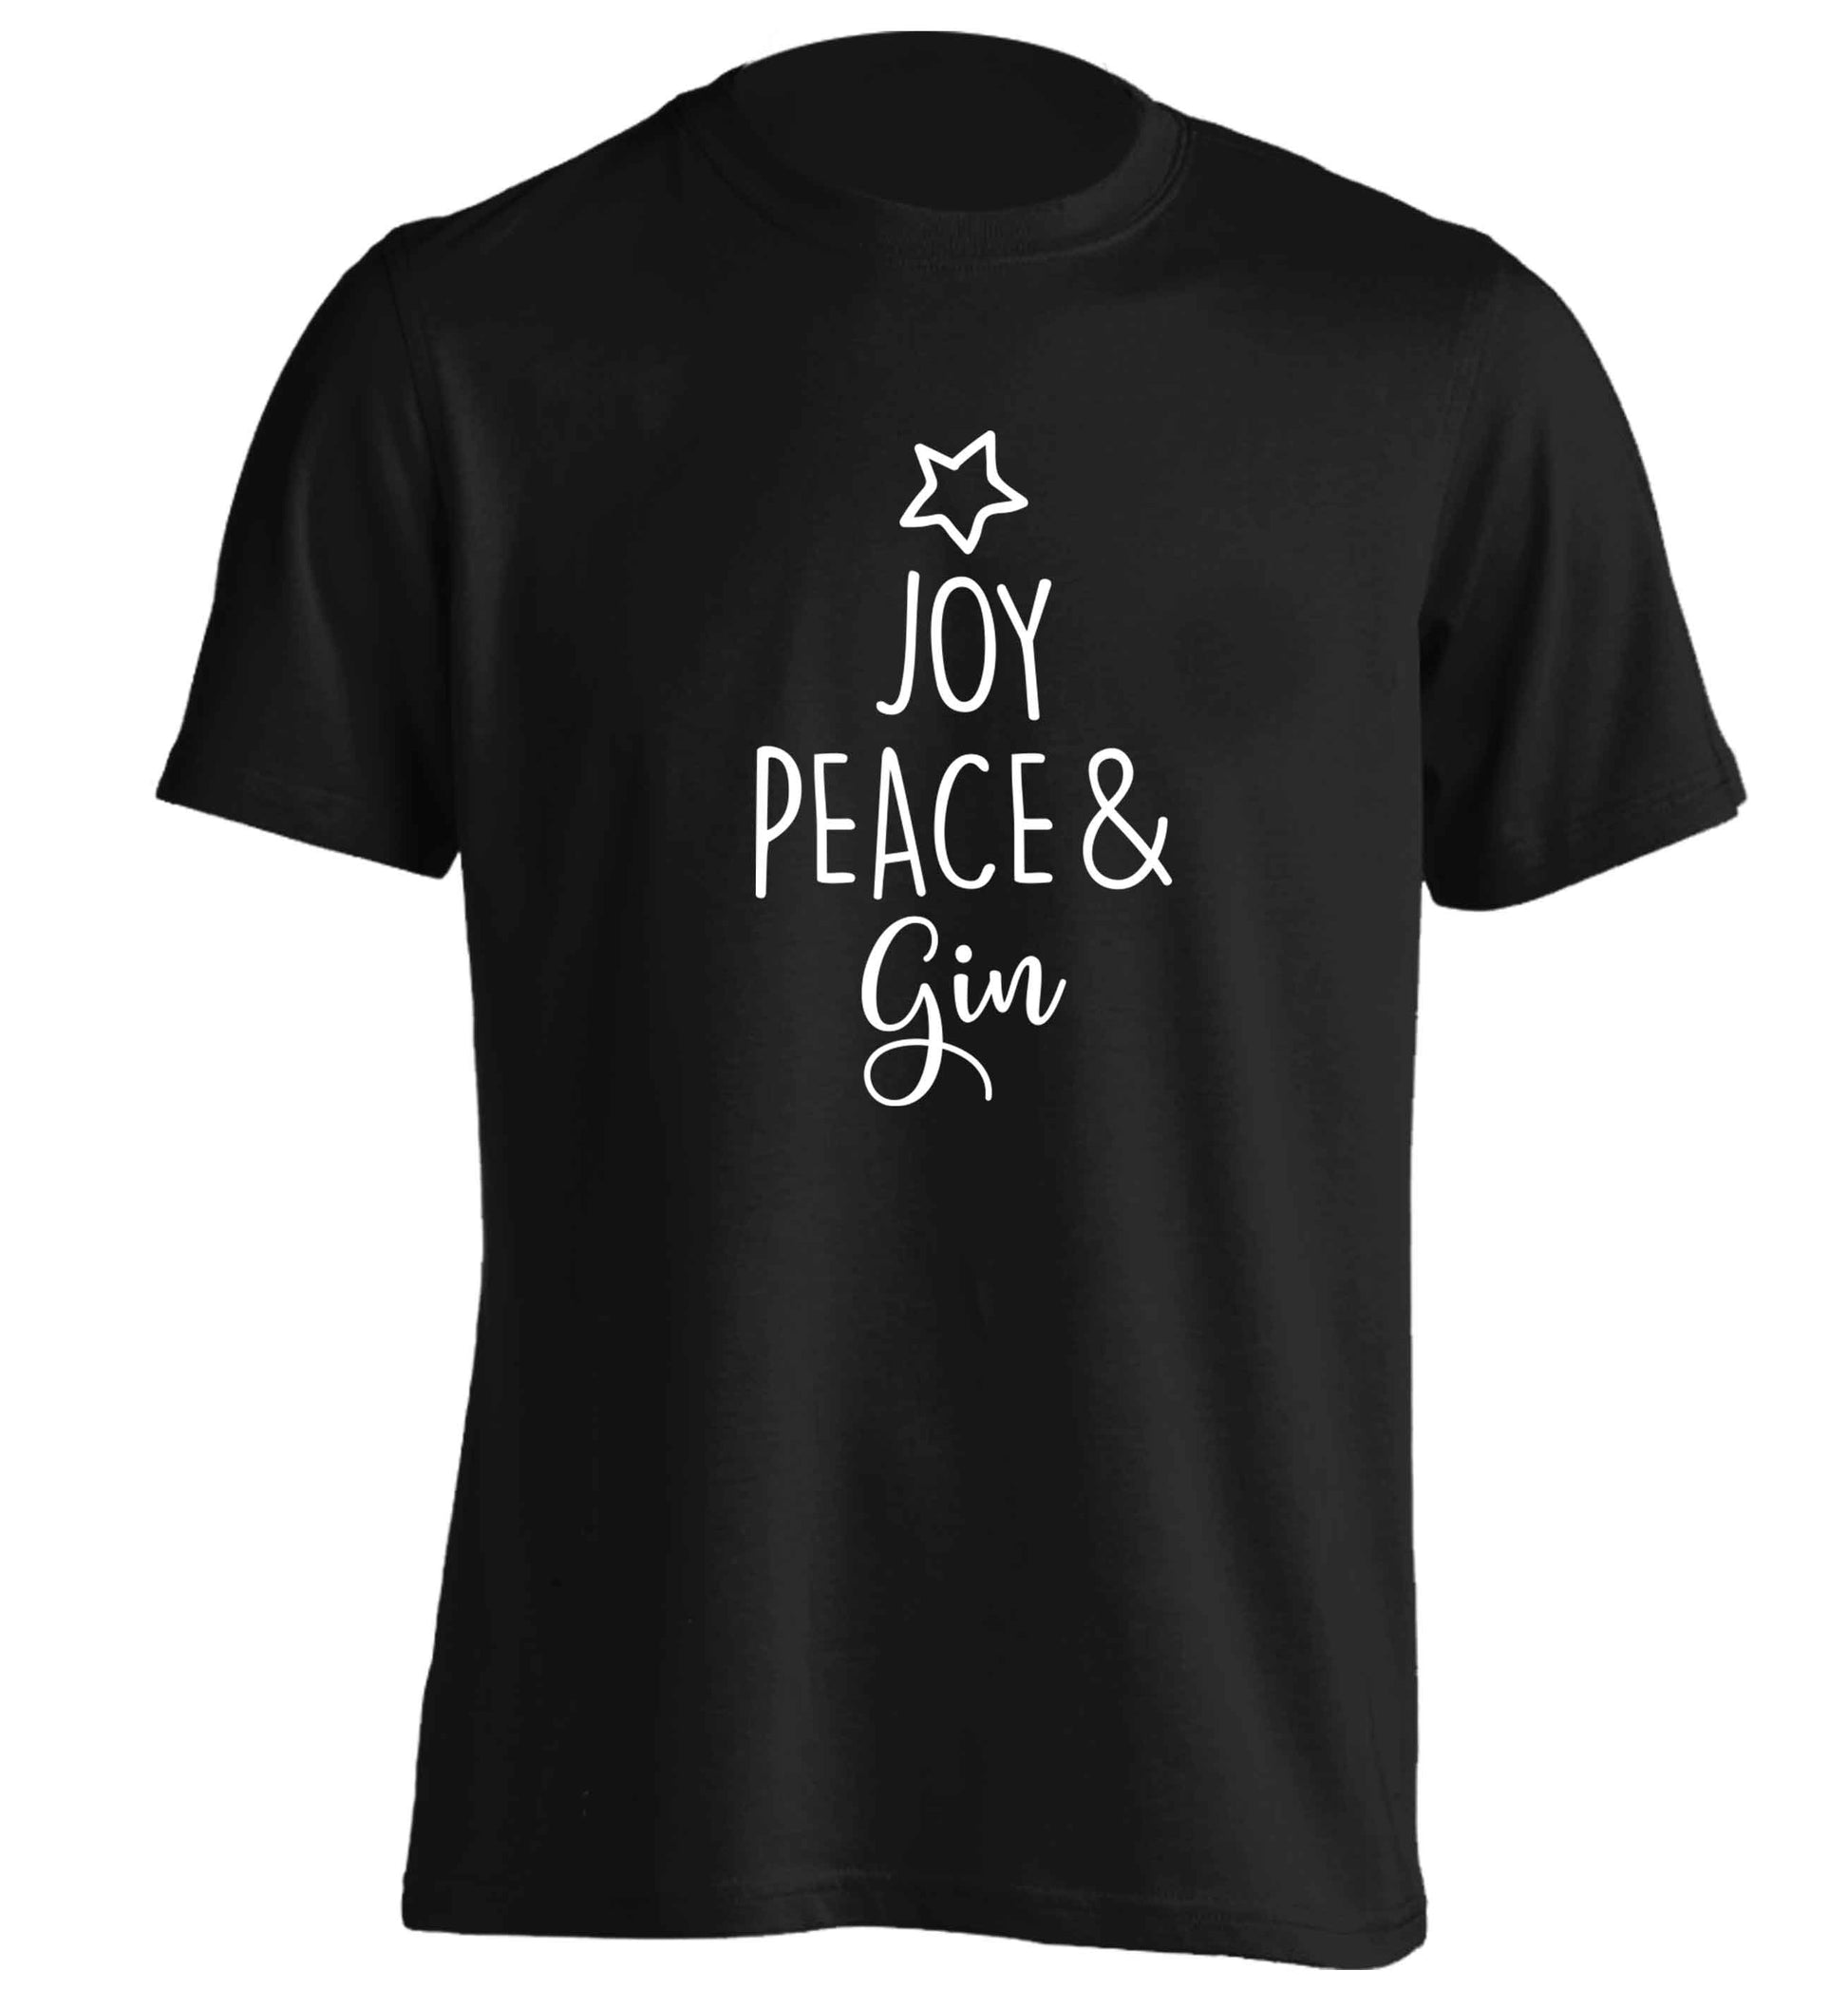 Joy peace and gin adults unisex black Tshirt 2XL